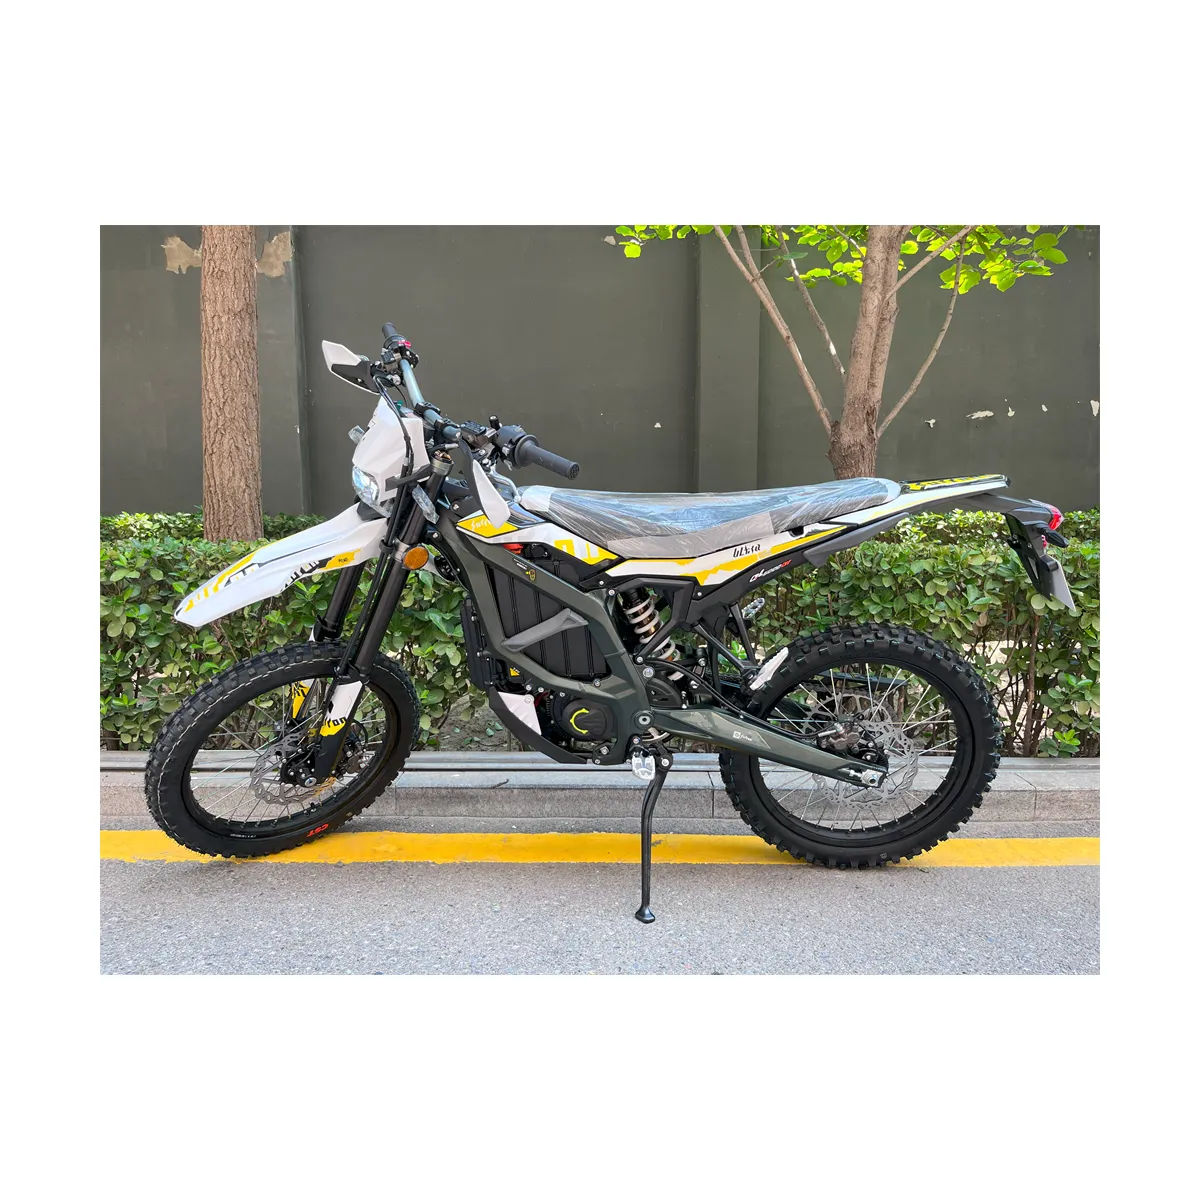 Suron Ultra Bee 74v 12,5 kW 55Ah Elektromotor rad Offroad Motorrad E Fahrrad Elektro Dirt Bike